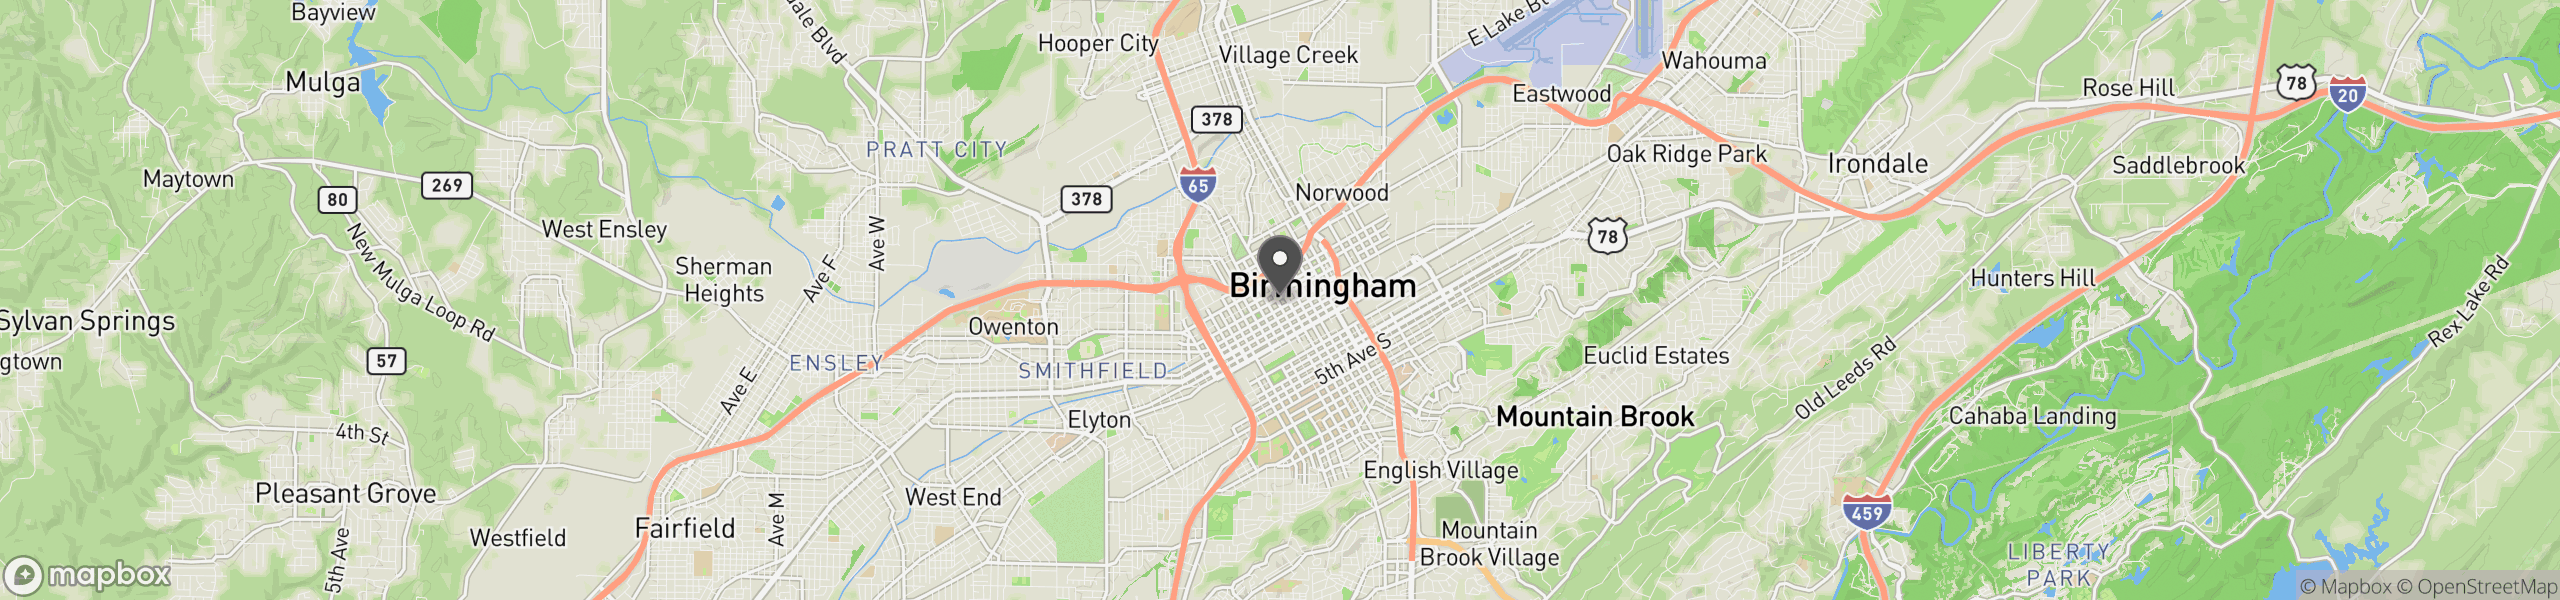 Birmingham, AL 35203